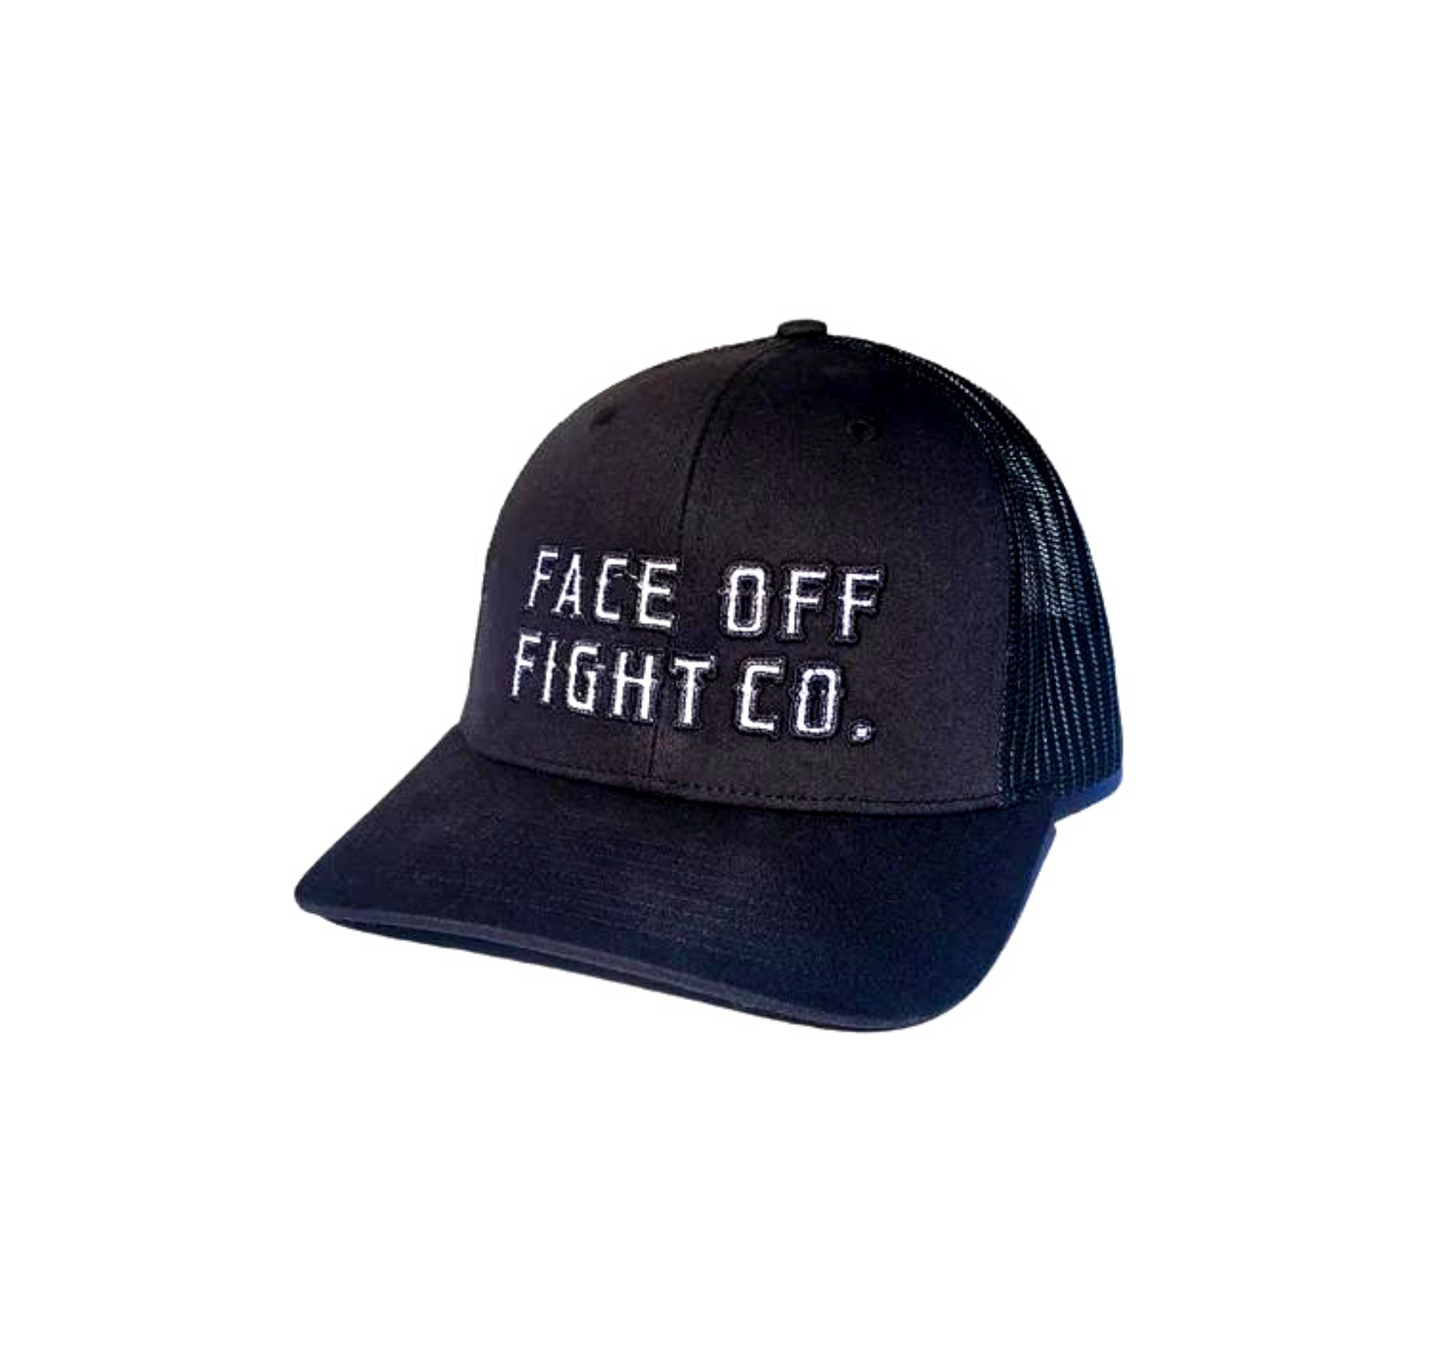 FOFCO Snapback Hat